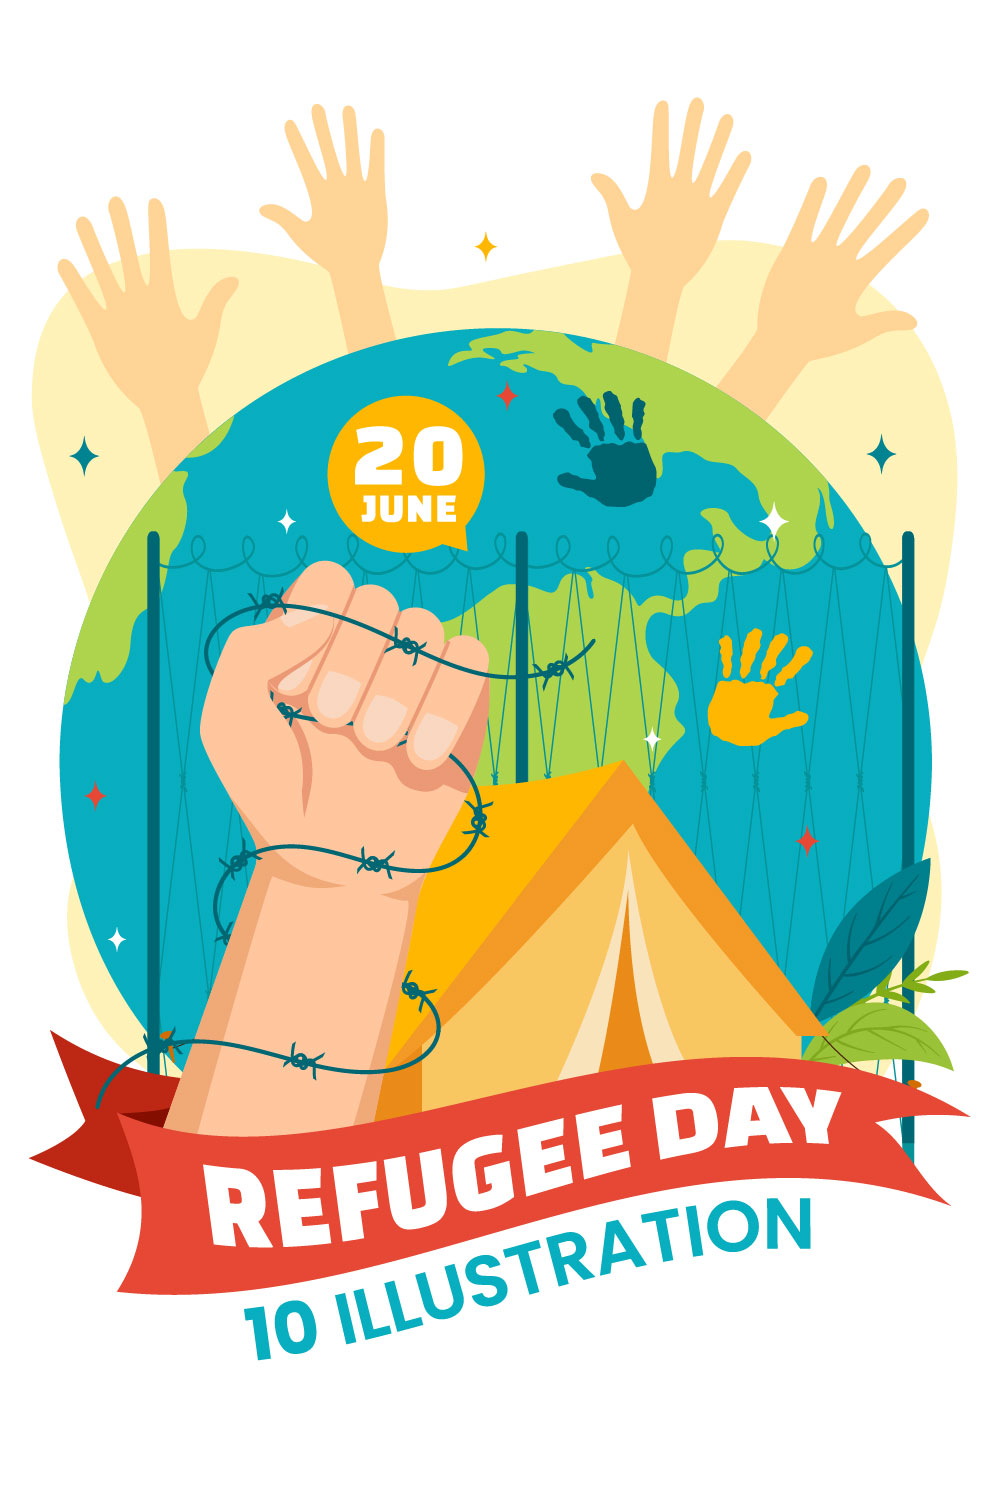 10 World Refugee Day Illustration pinterest preview image.